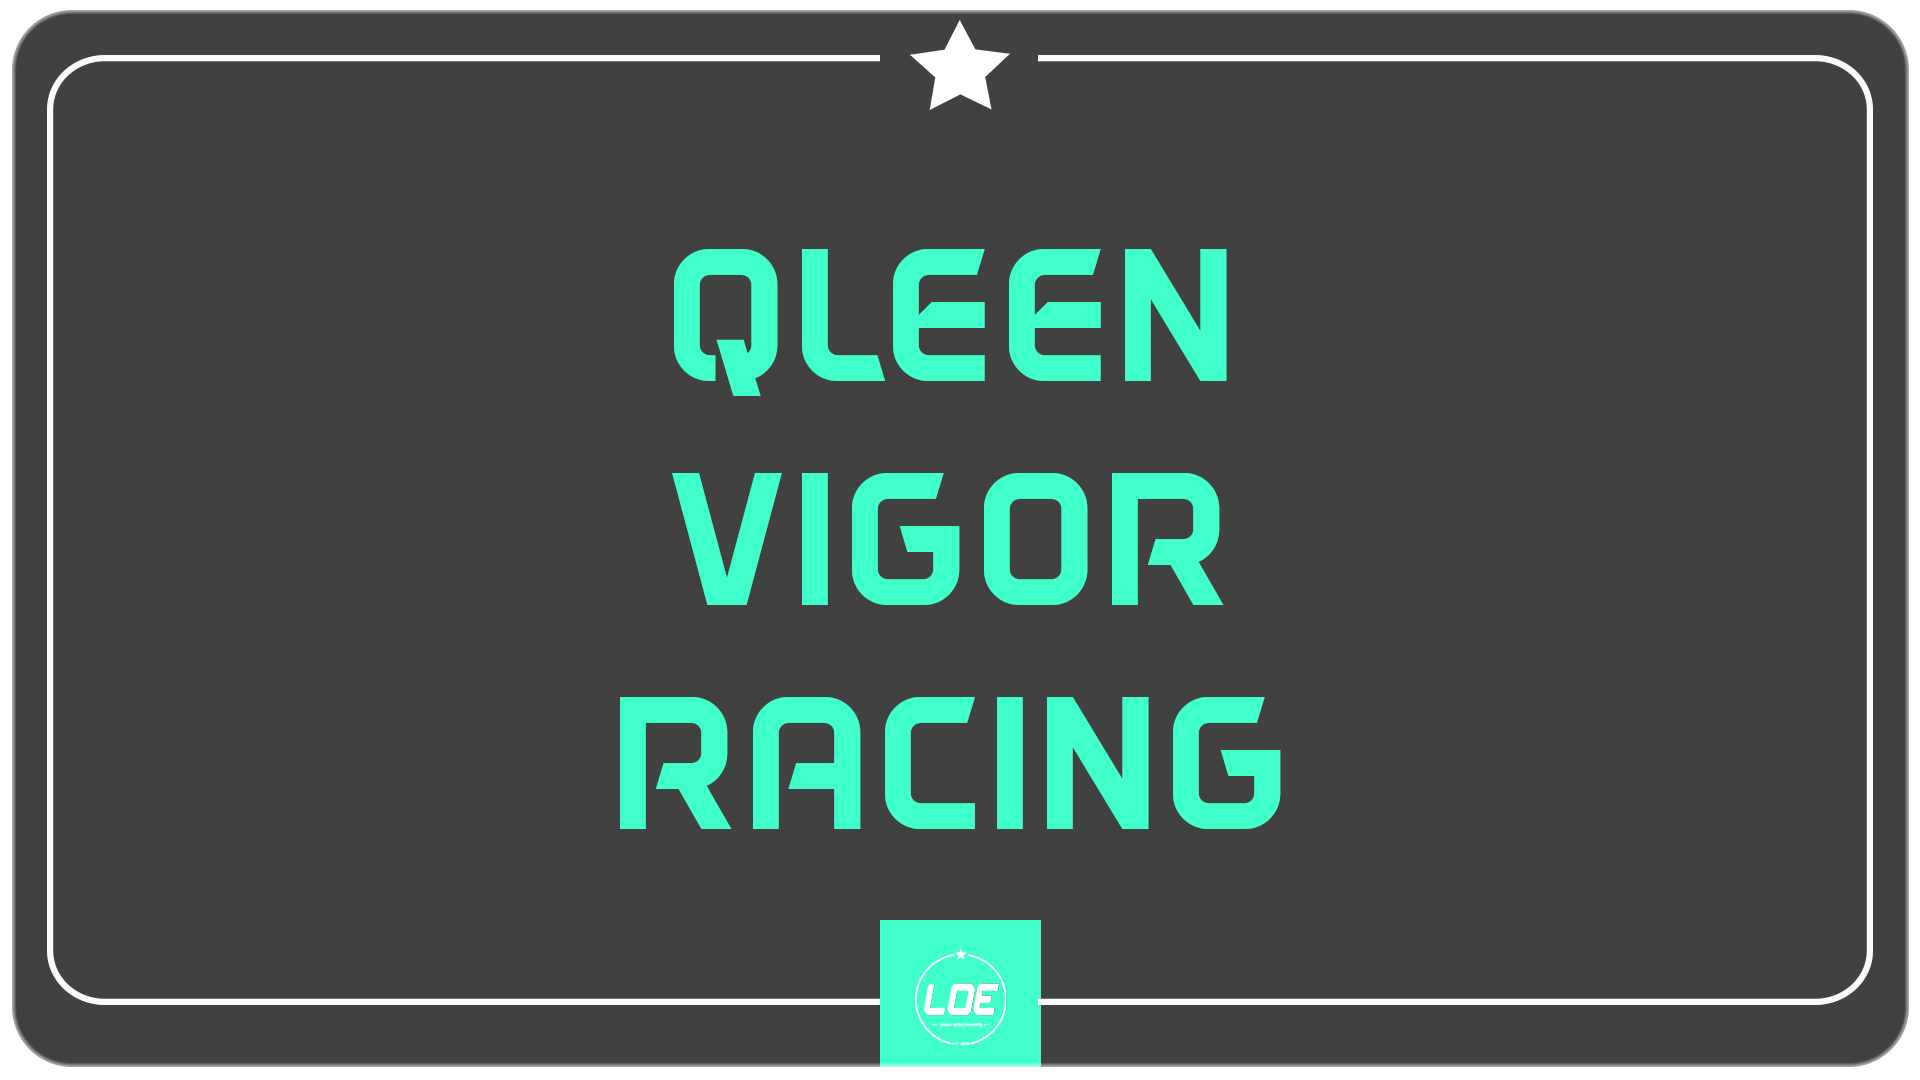 QleenVigor Racing